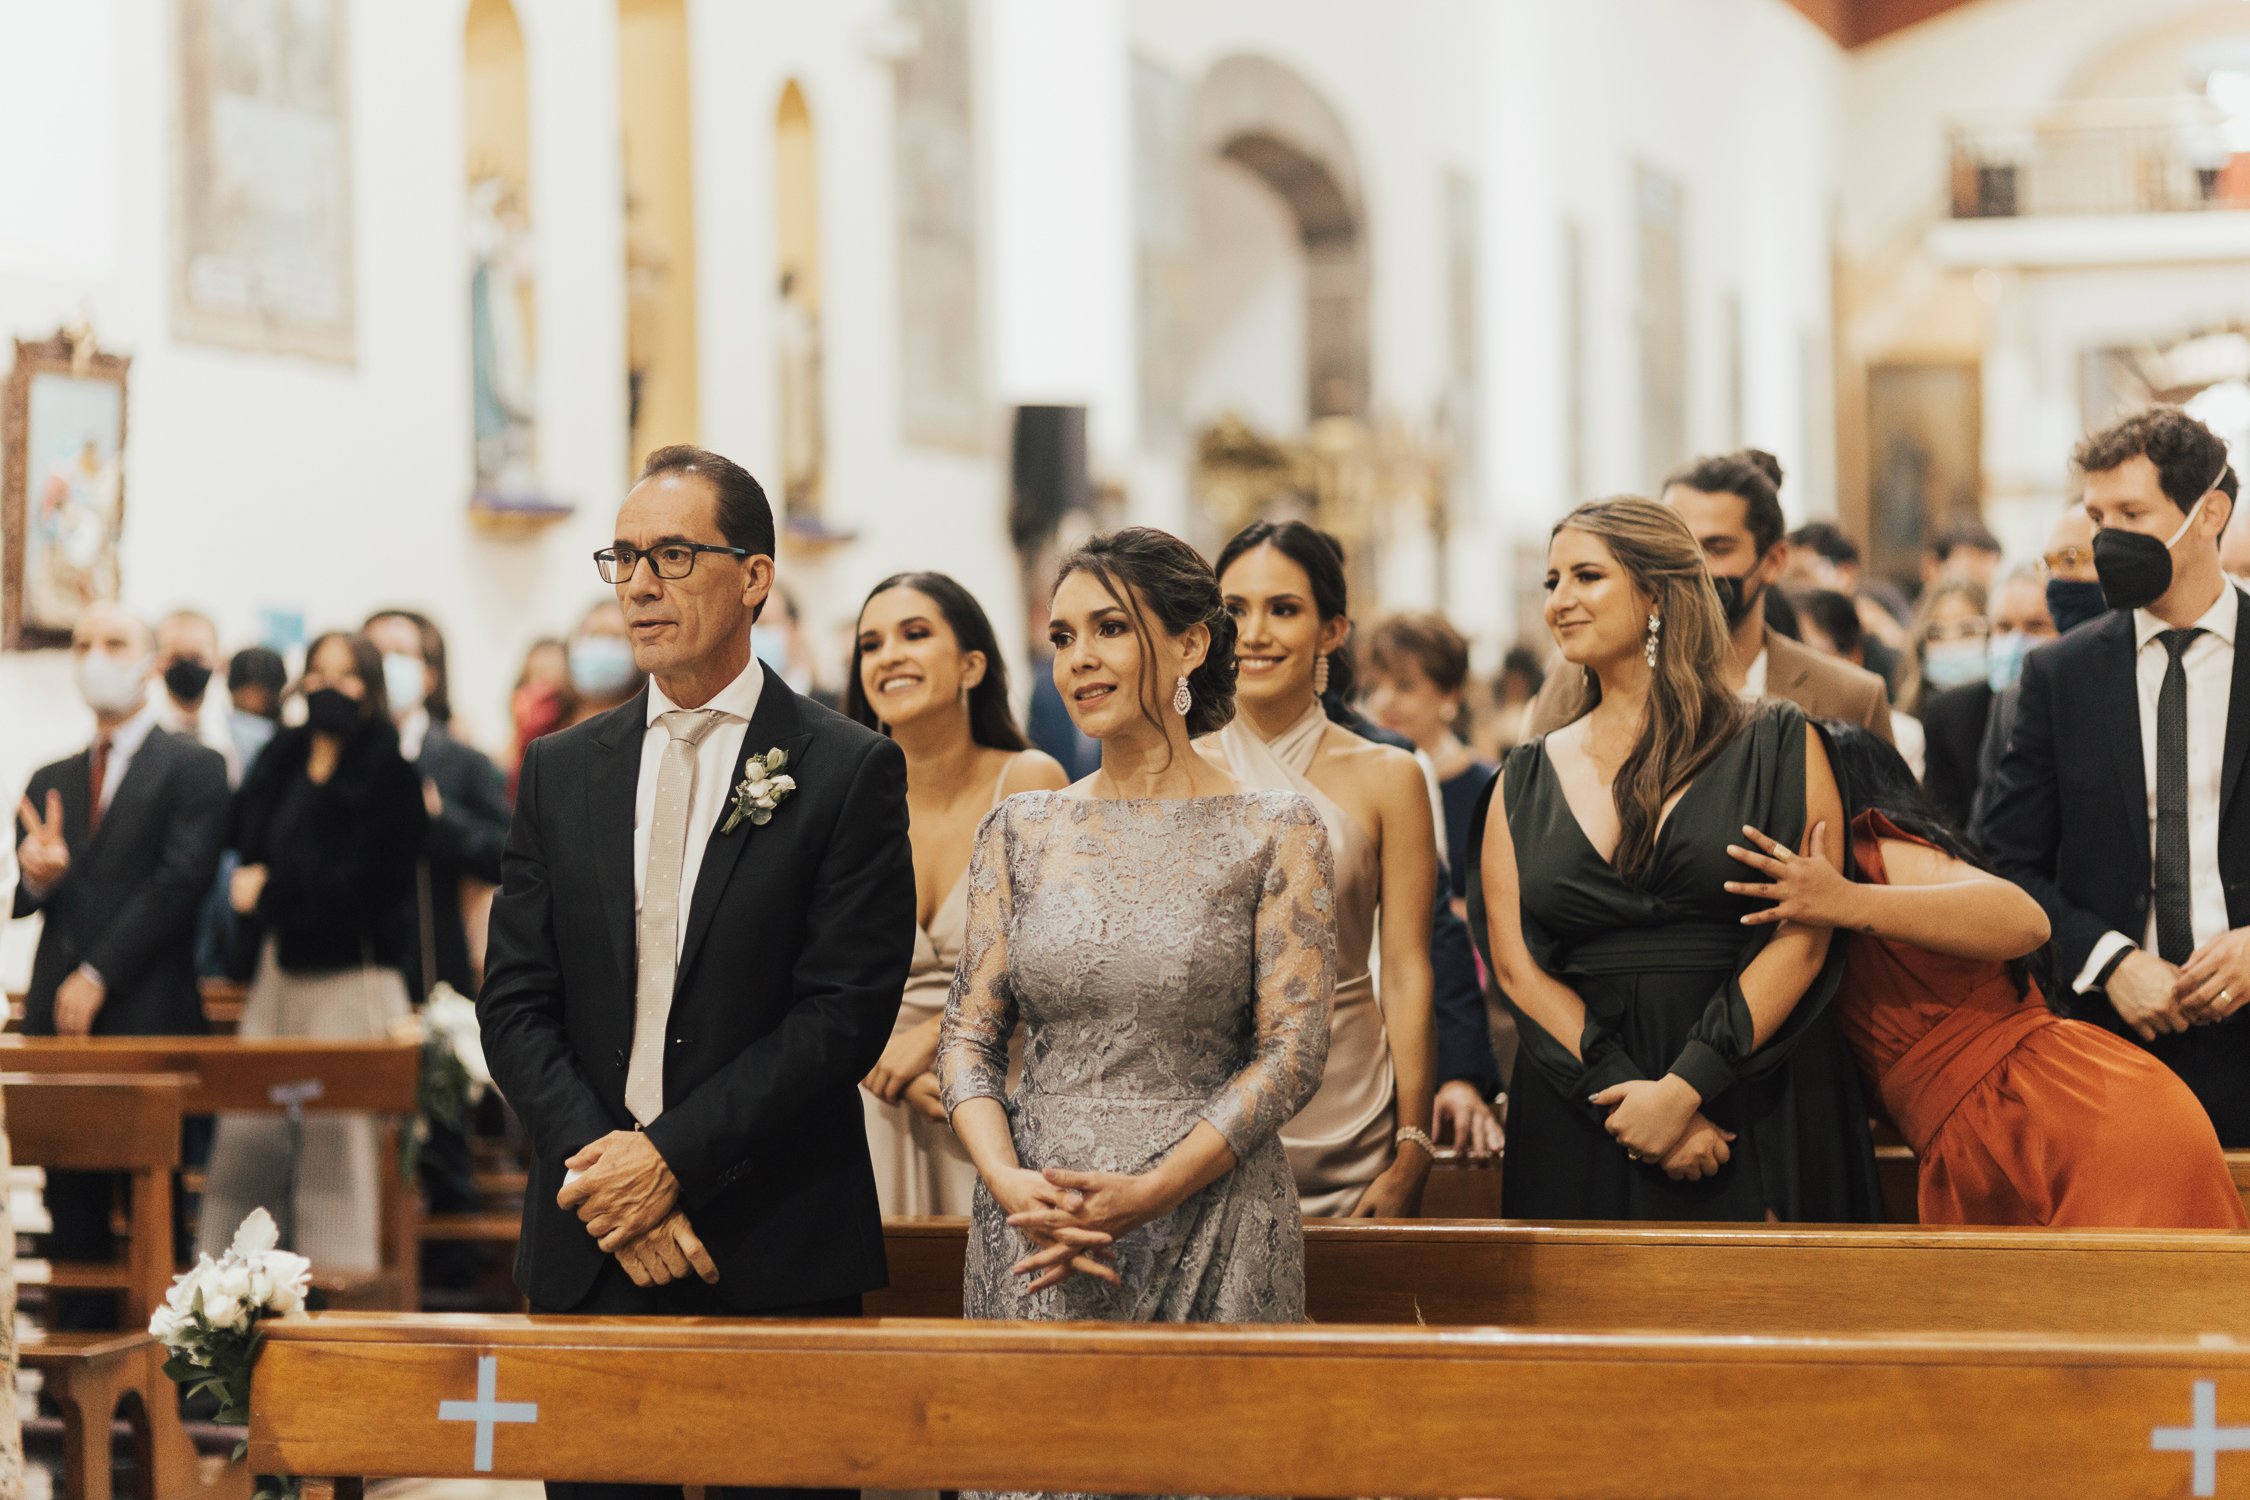 Michelle-Agurto-Fotografia-Fotografo-Bodas-Ecuador-Quito-Guayaquil-Wedding-Photographer-MariaPaz-Felipe-113.JPG